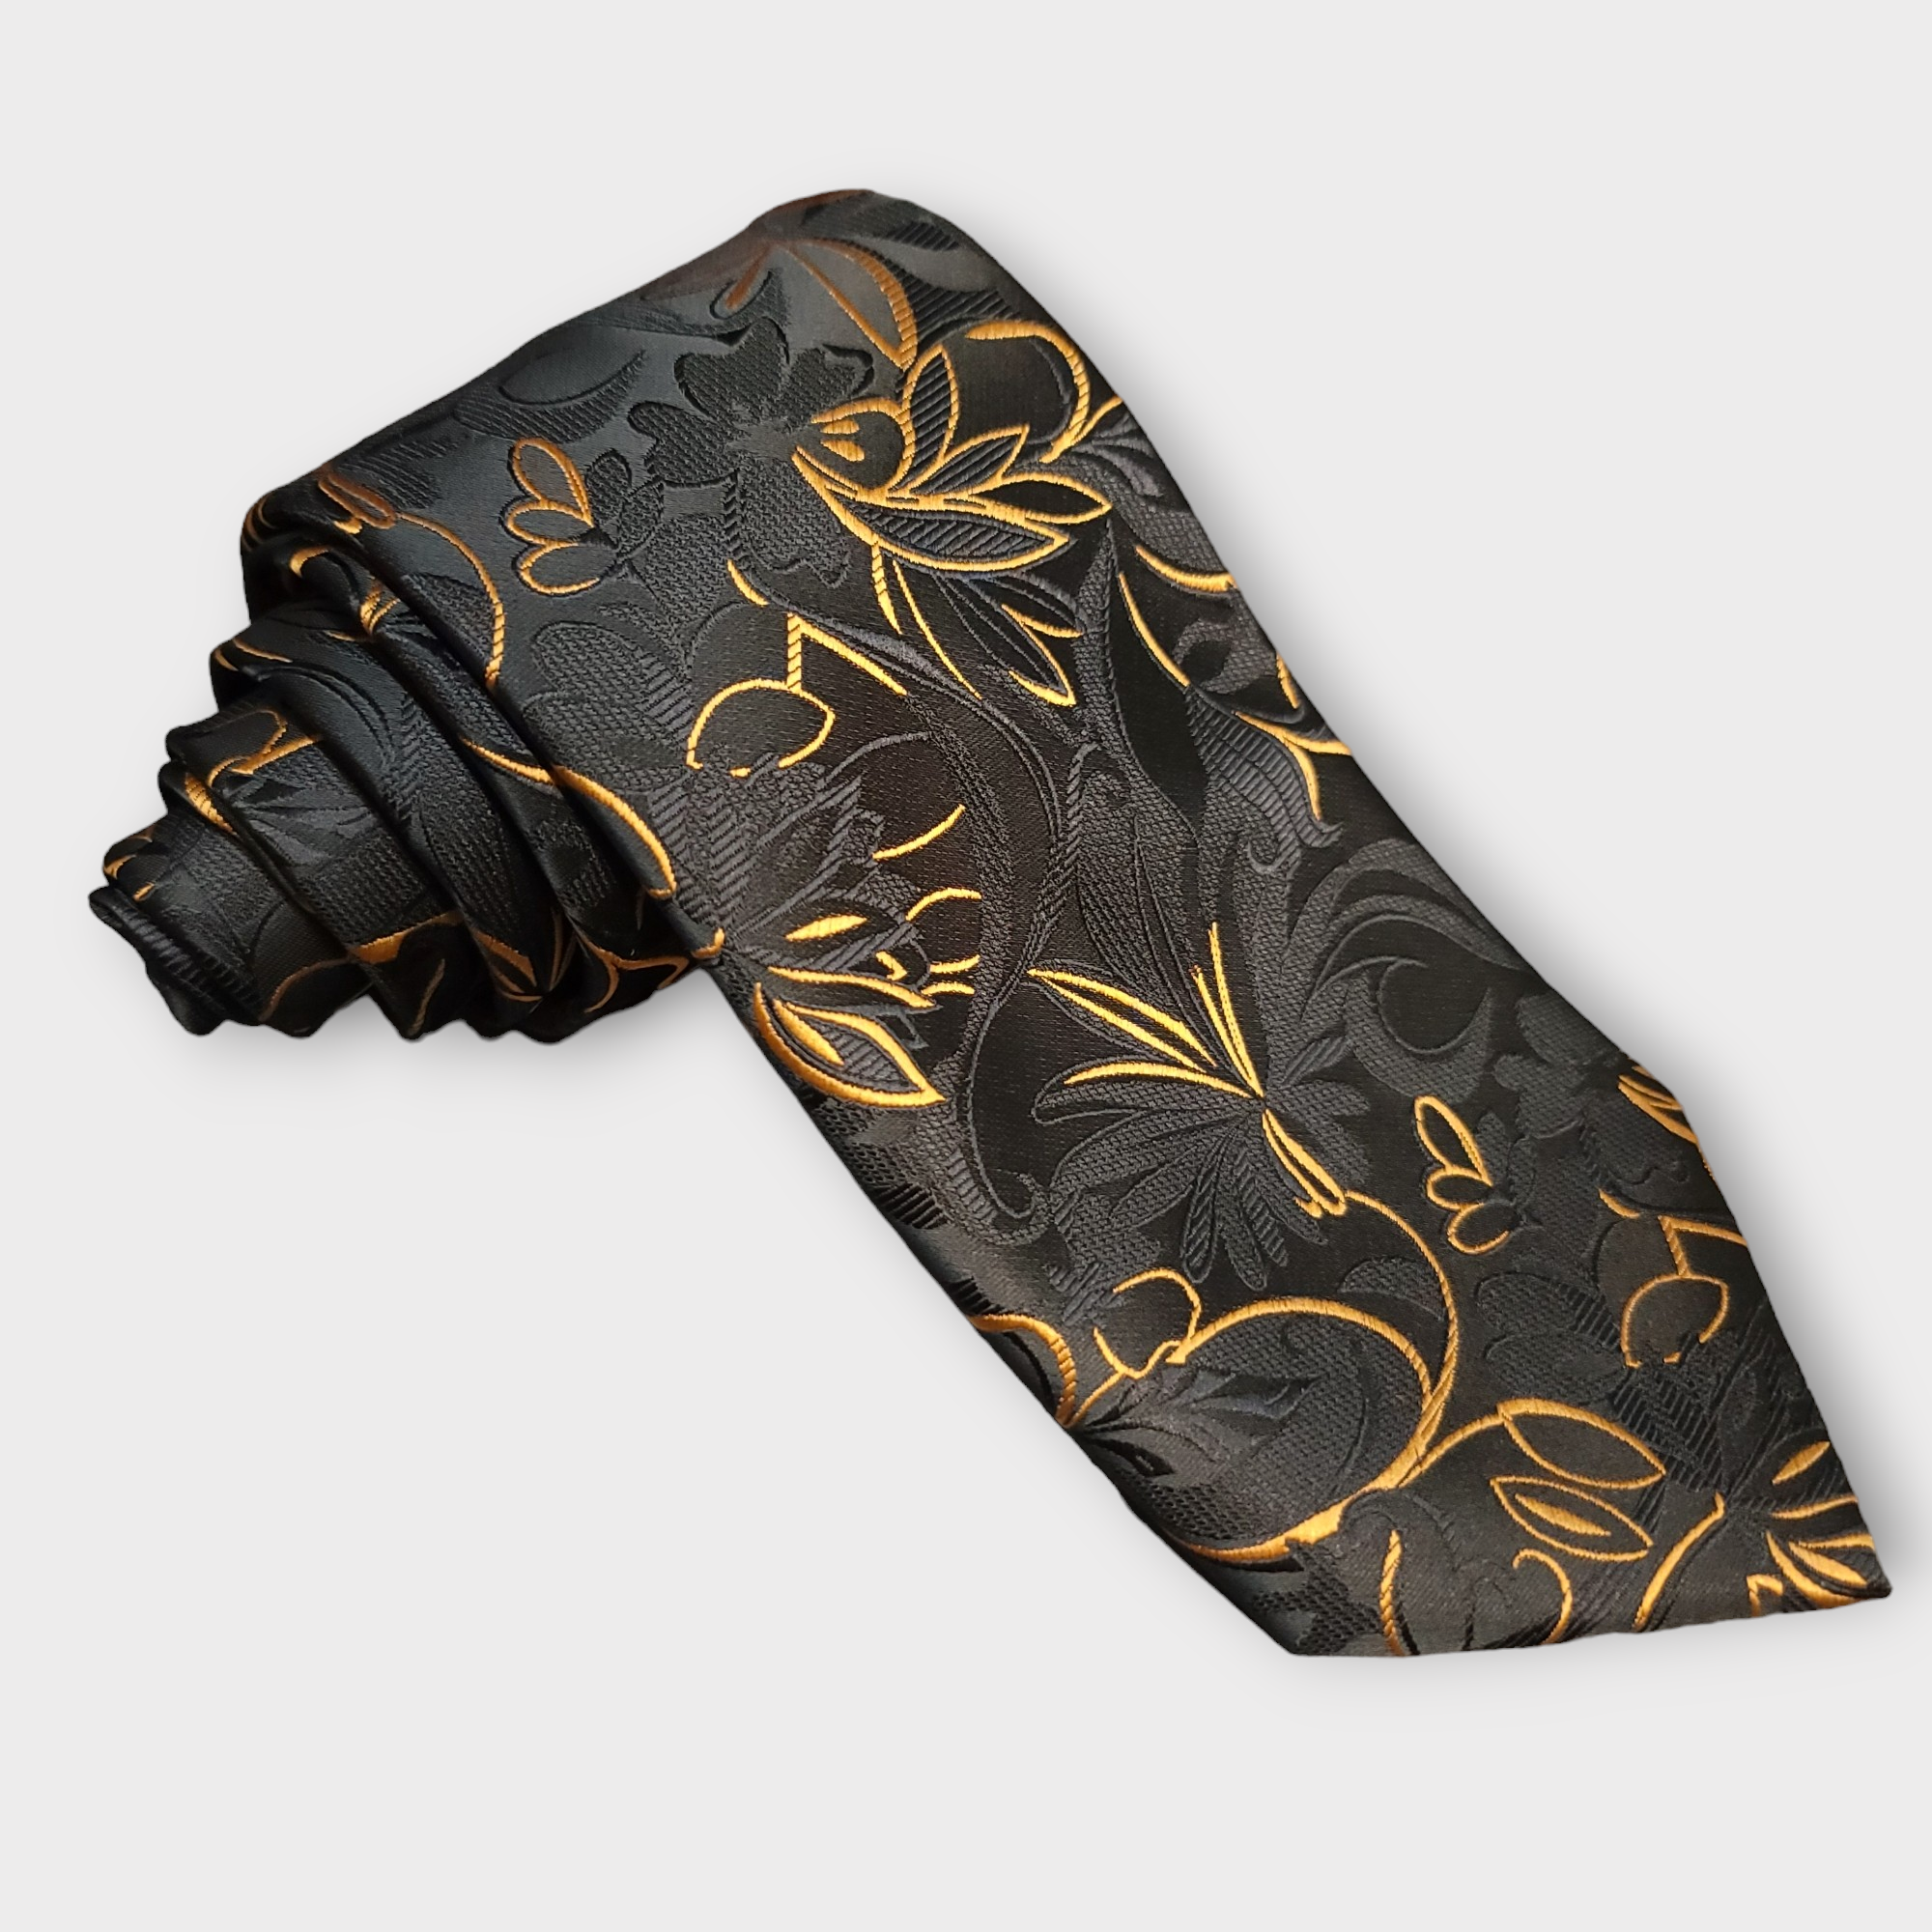 Black Gold Floral Pattern Silk Tie Pocket Square Cufflink Set